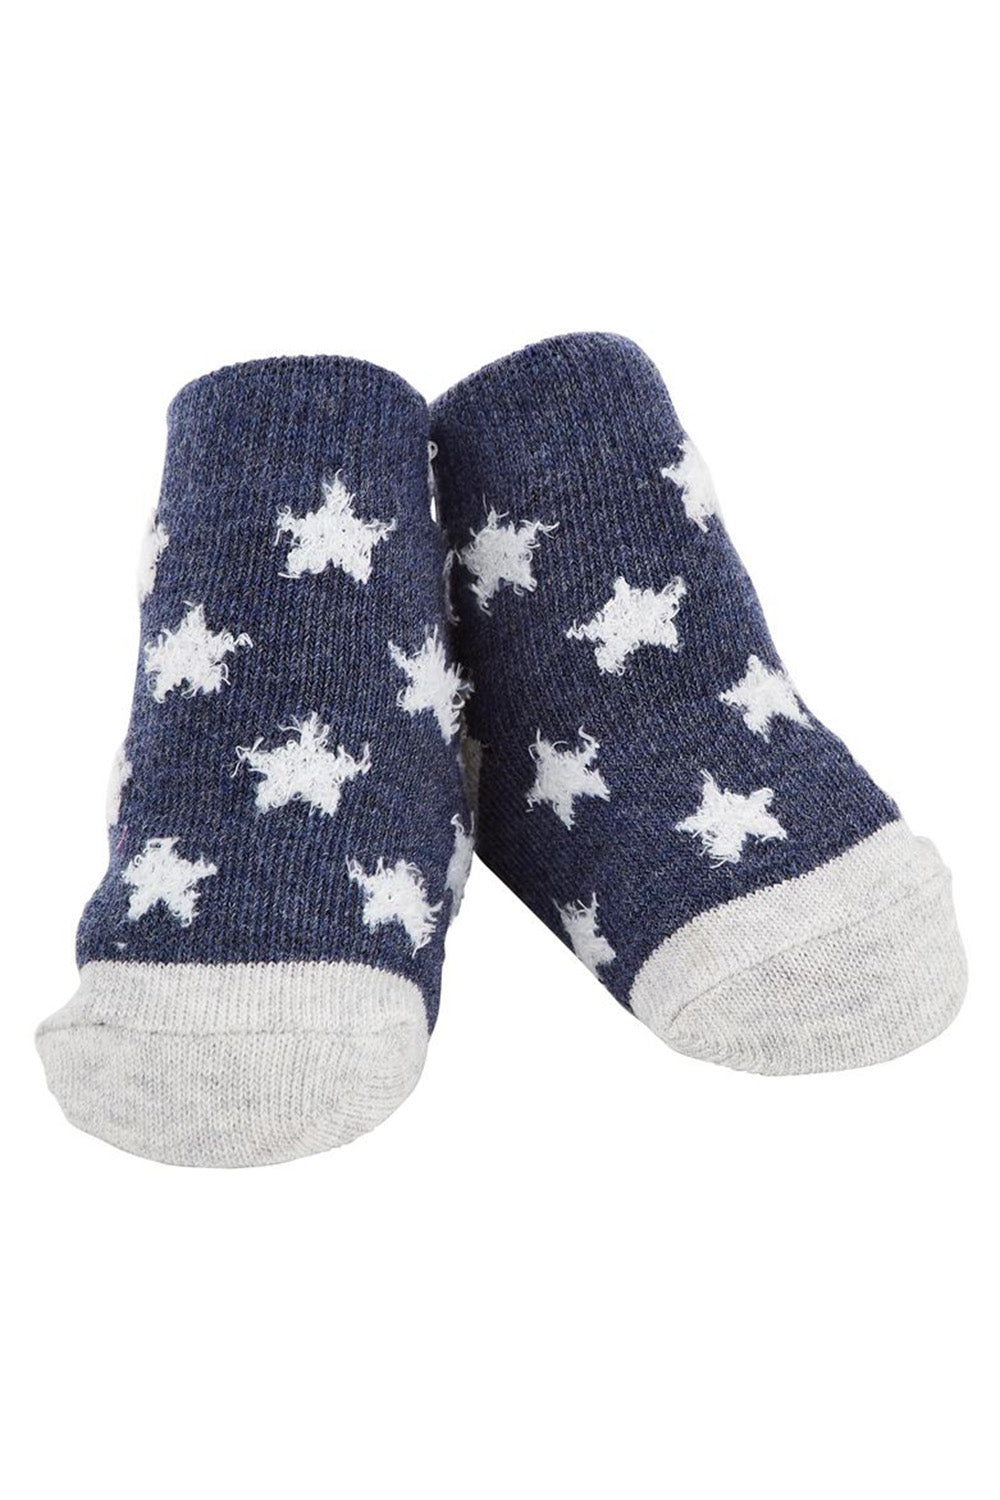 Baby Socks - Navy Chenille Star